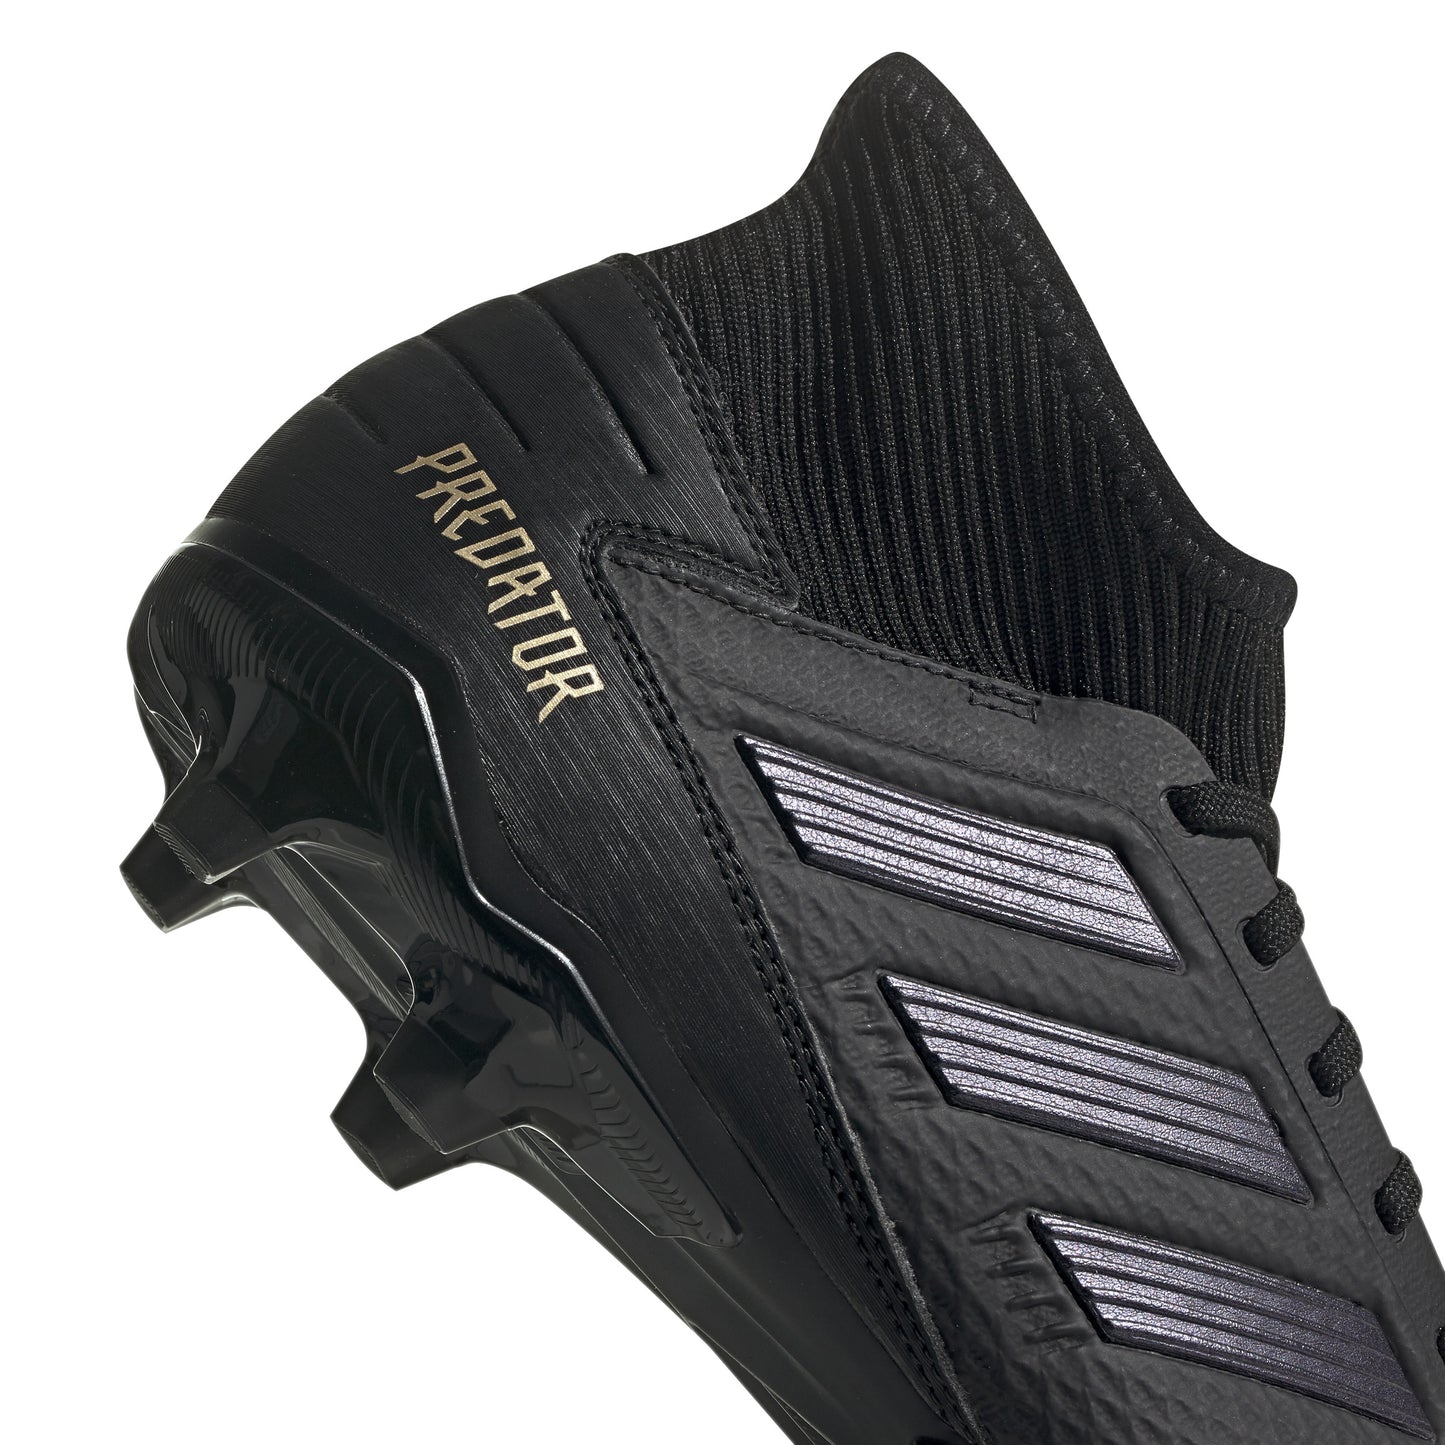 Adidas Predator 19.3 FG Football Boots - Black - Queensferry Sports